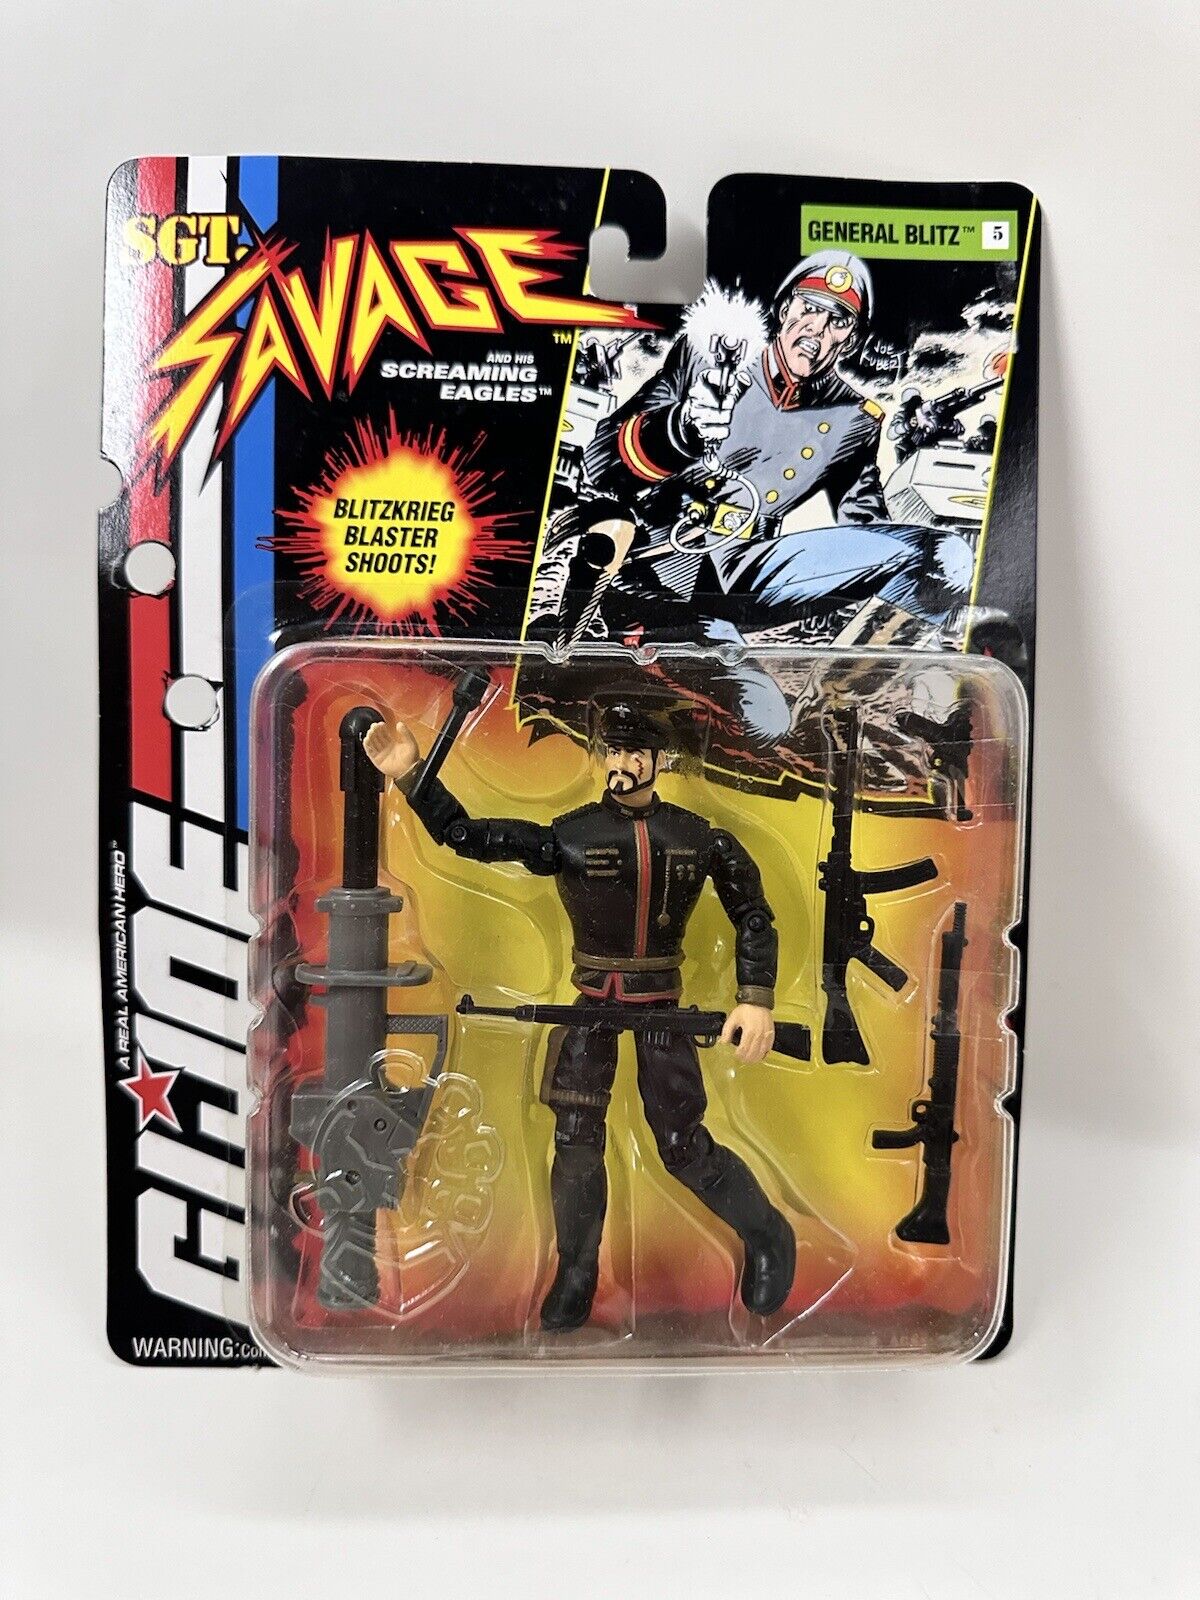 GI Joe SGT Savage Screaming Eagles General Blitz 5 Blitzkrieg Figure 1994 Hasbro